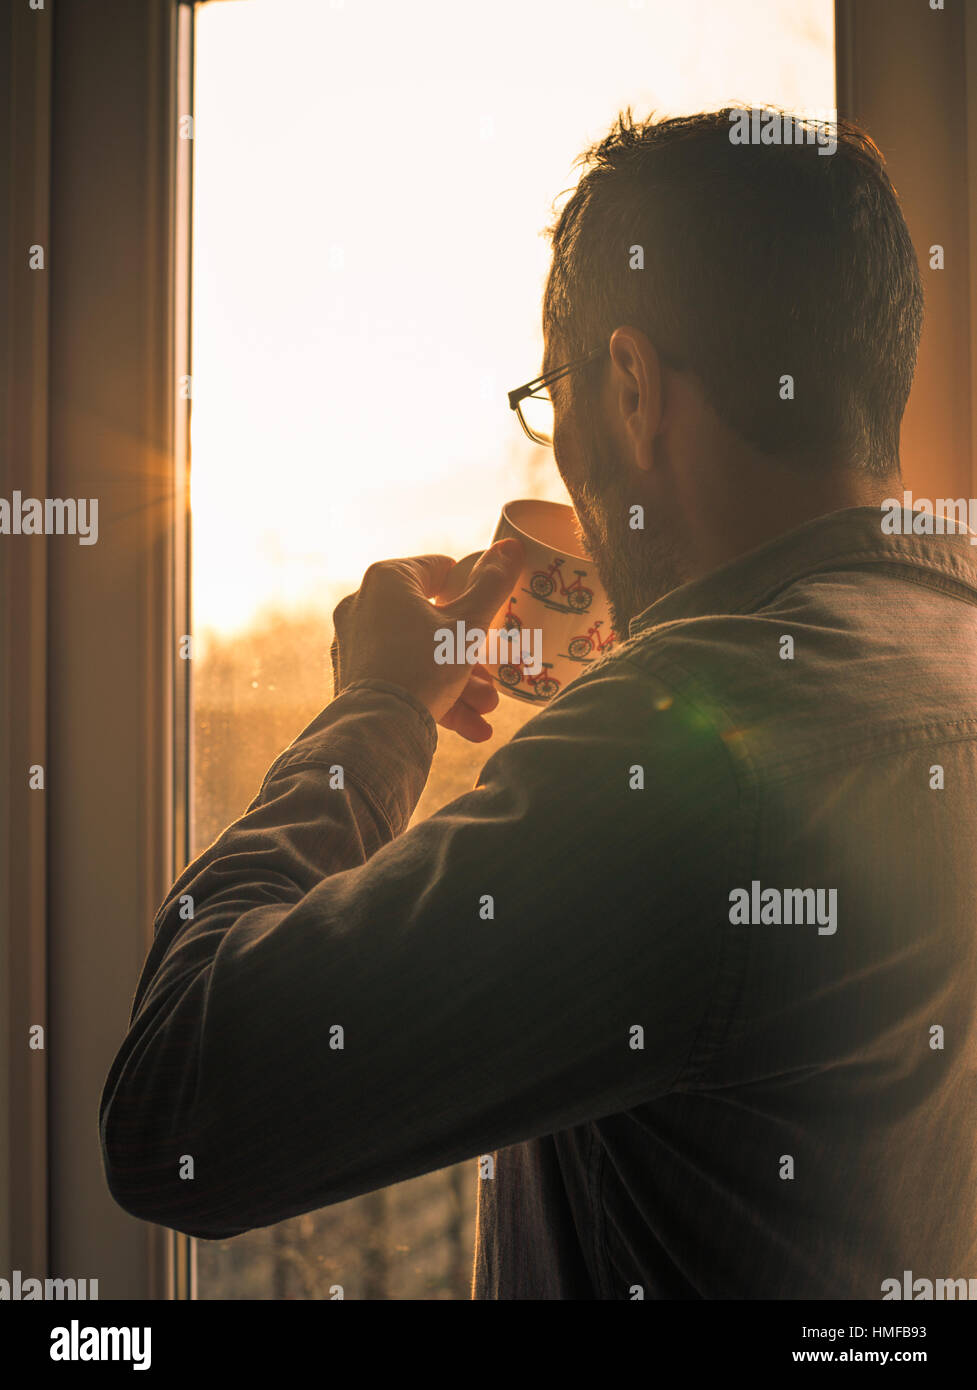 Man drinks from a mug, as warm morning sunlight beams through a window. Stock Photo